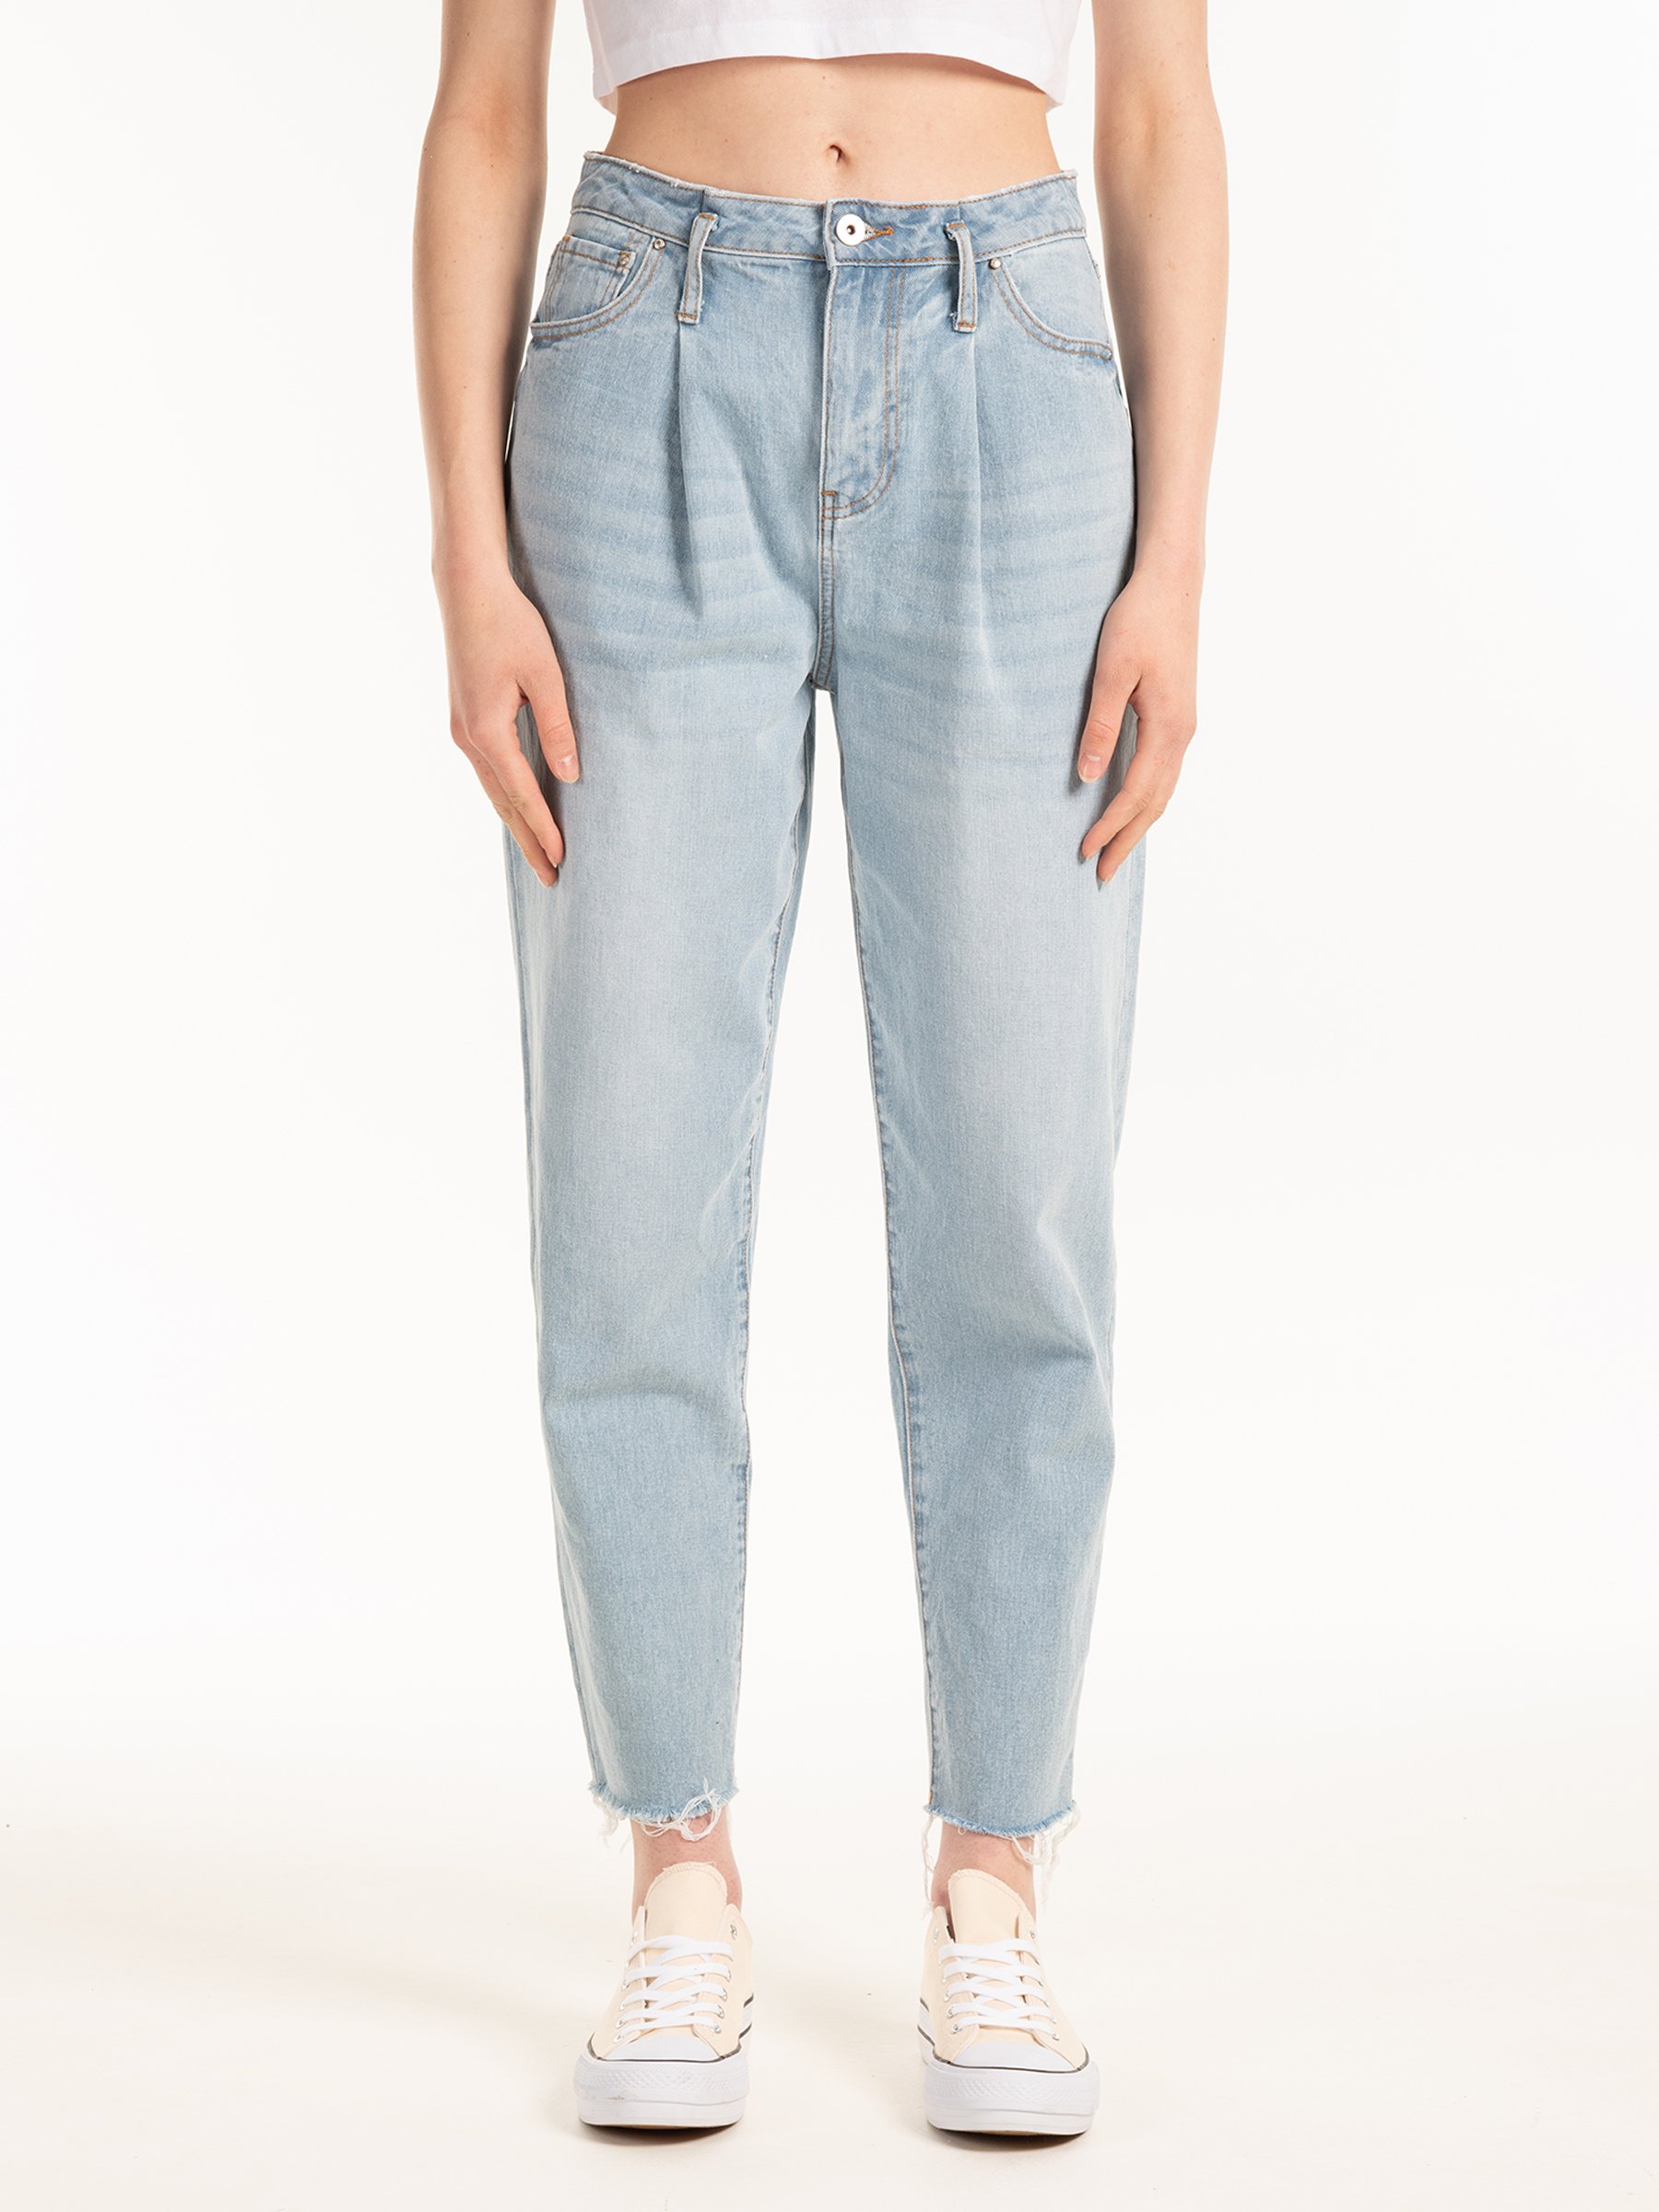 WOMEN FASHION Jeans Slouchy jeans NO STYLE discount 60% Zara slouchy jeans Beige 40                  EU 